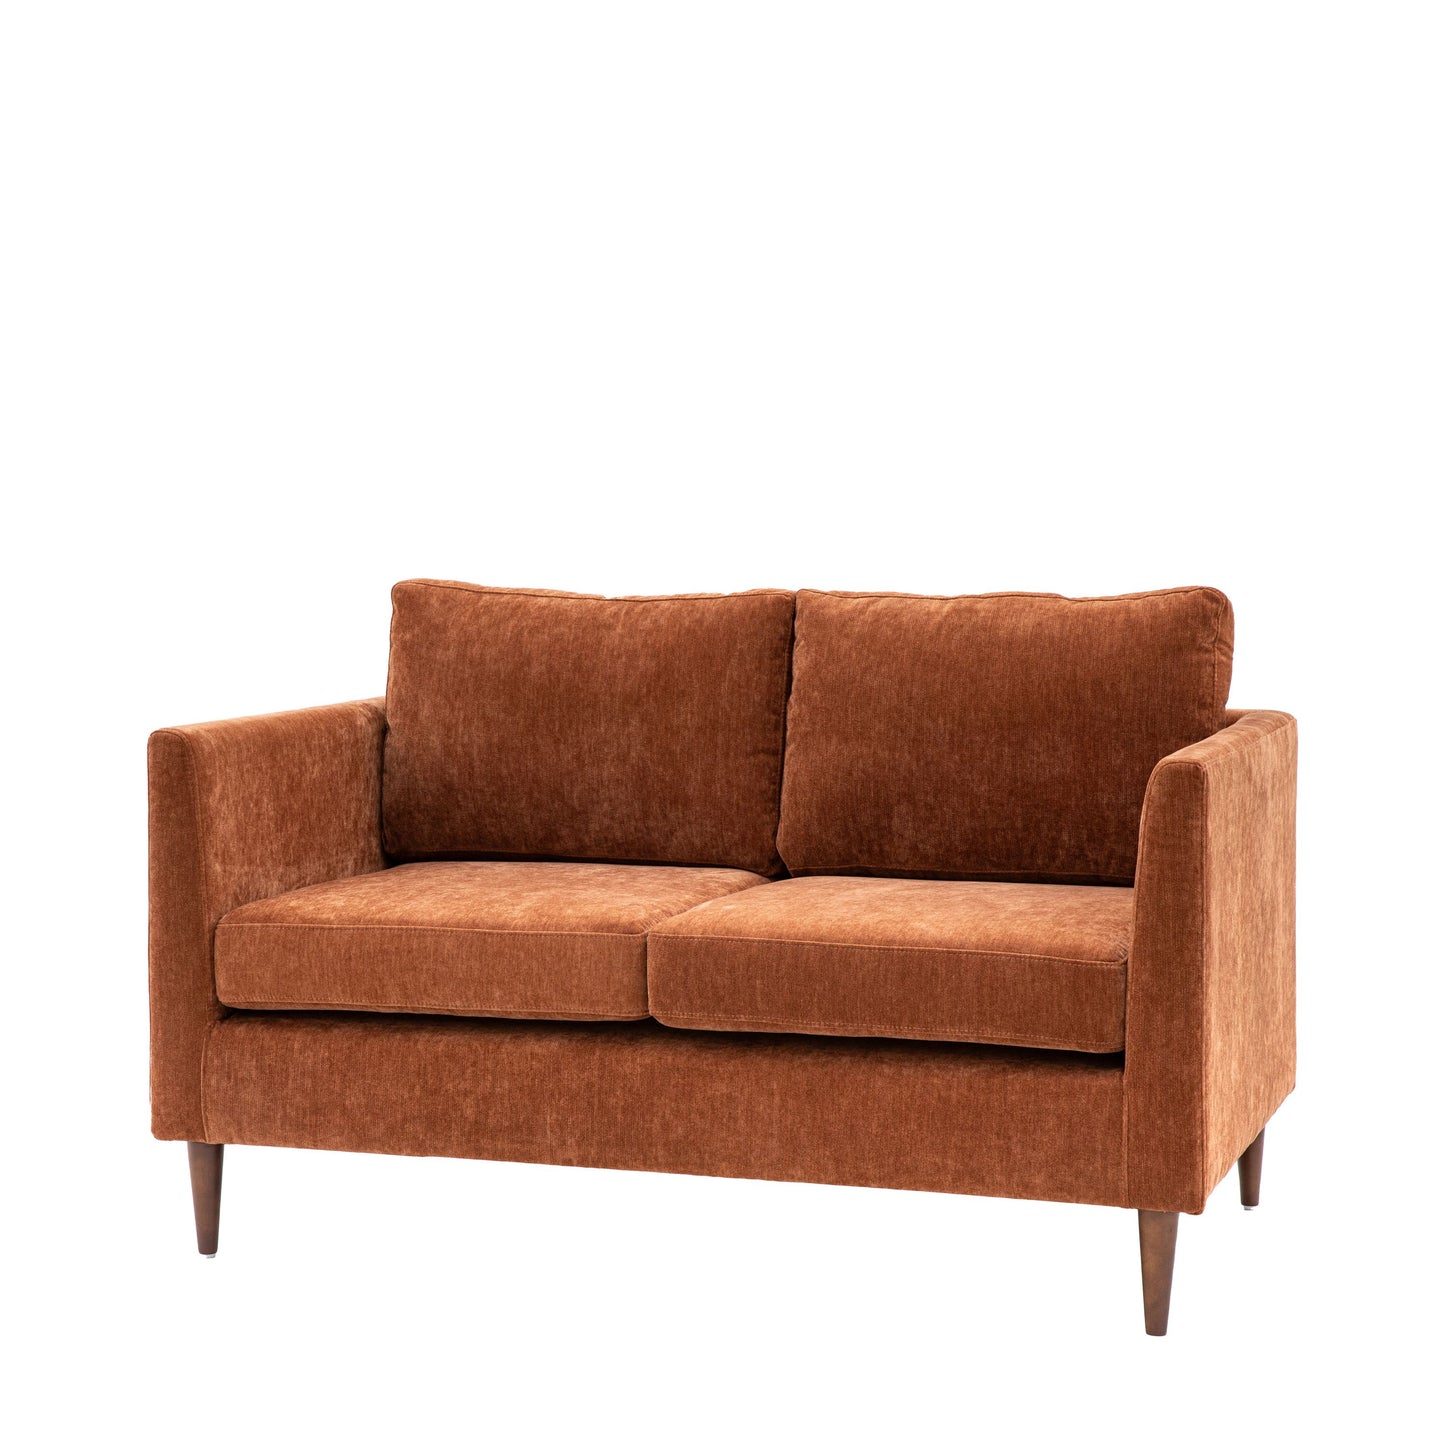 Conrad 2 Seater Sofa in Rust